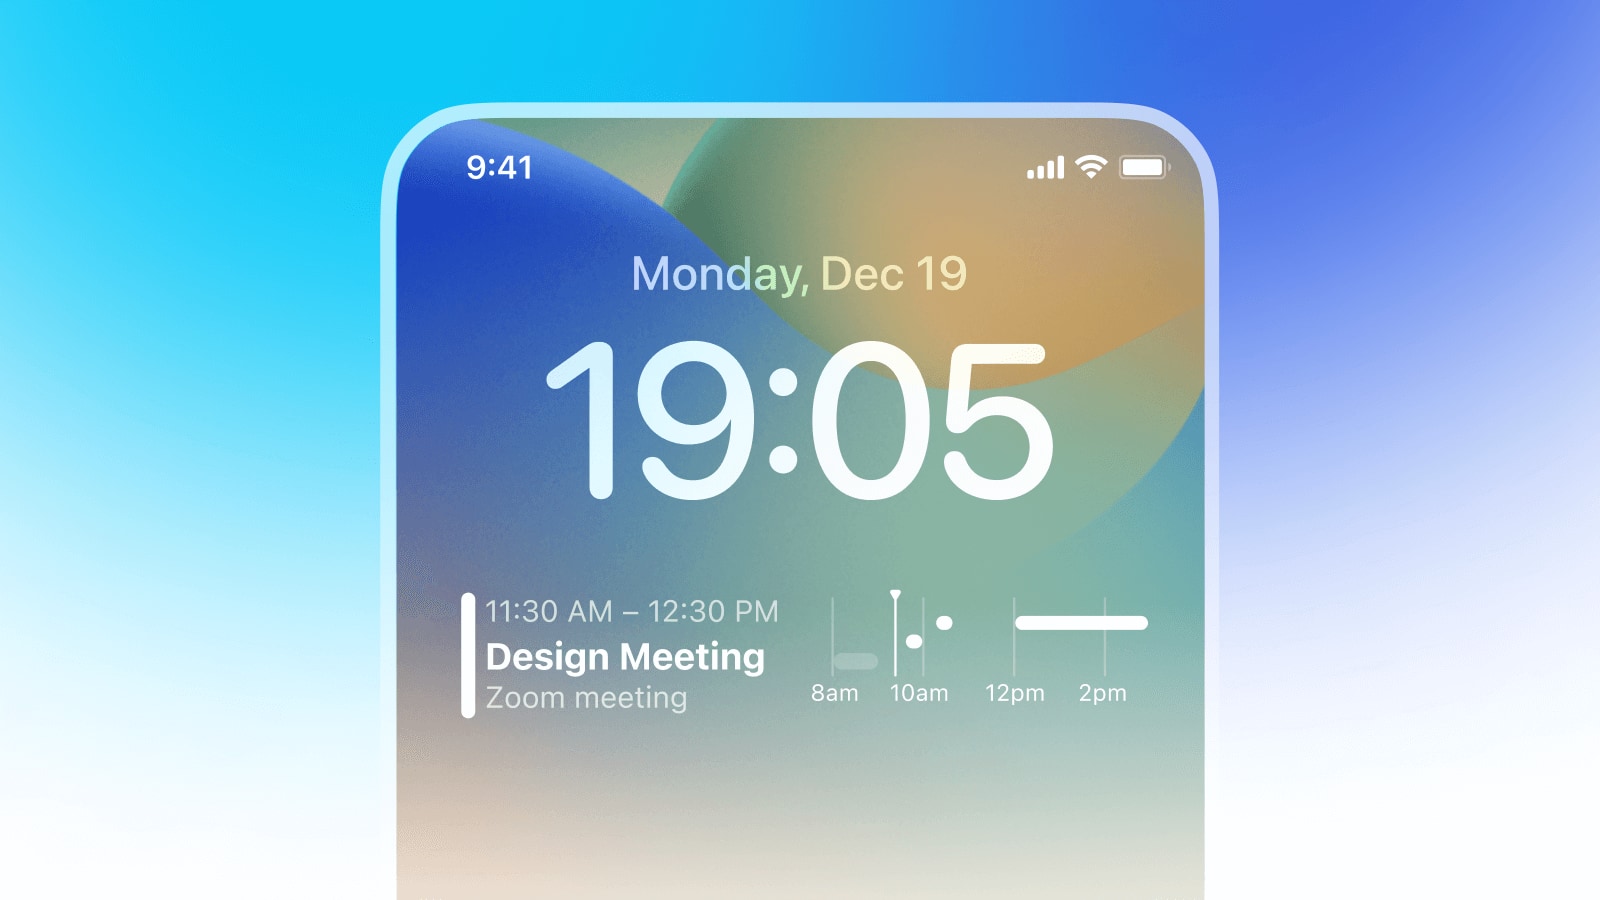 Marketing image showcasing the calendar widgets Spark for iPhone